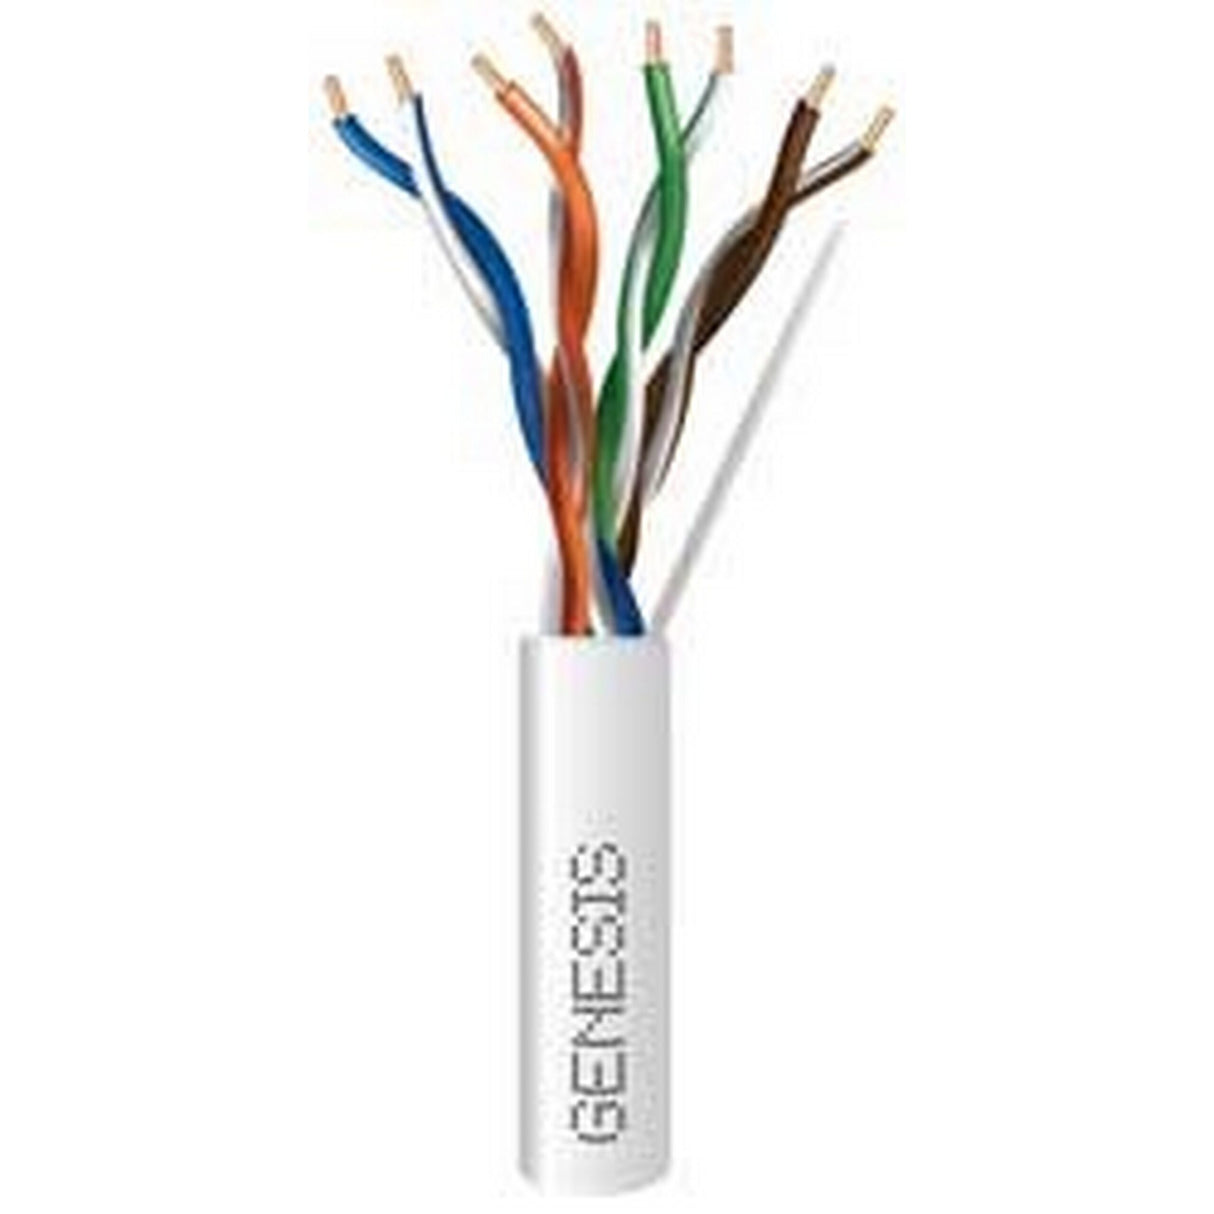 Genesis Cat 5e 24G Riser Cable 1000 Foot Box, White